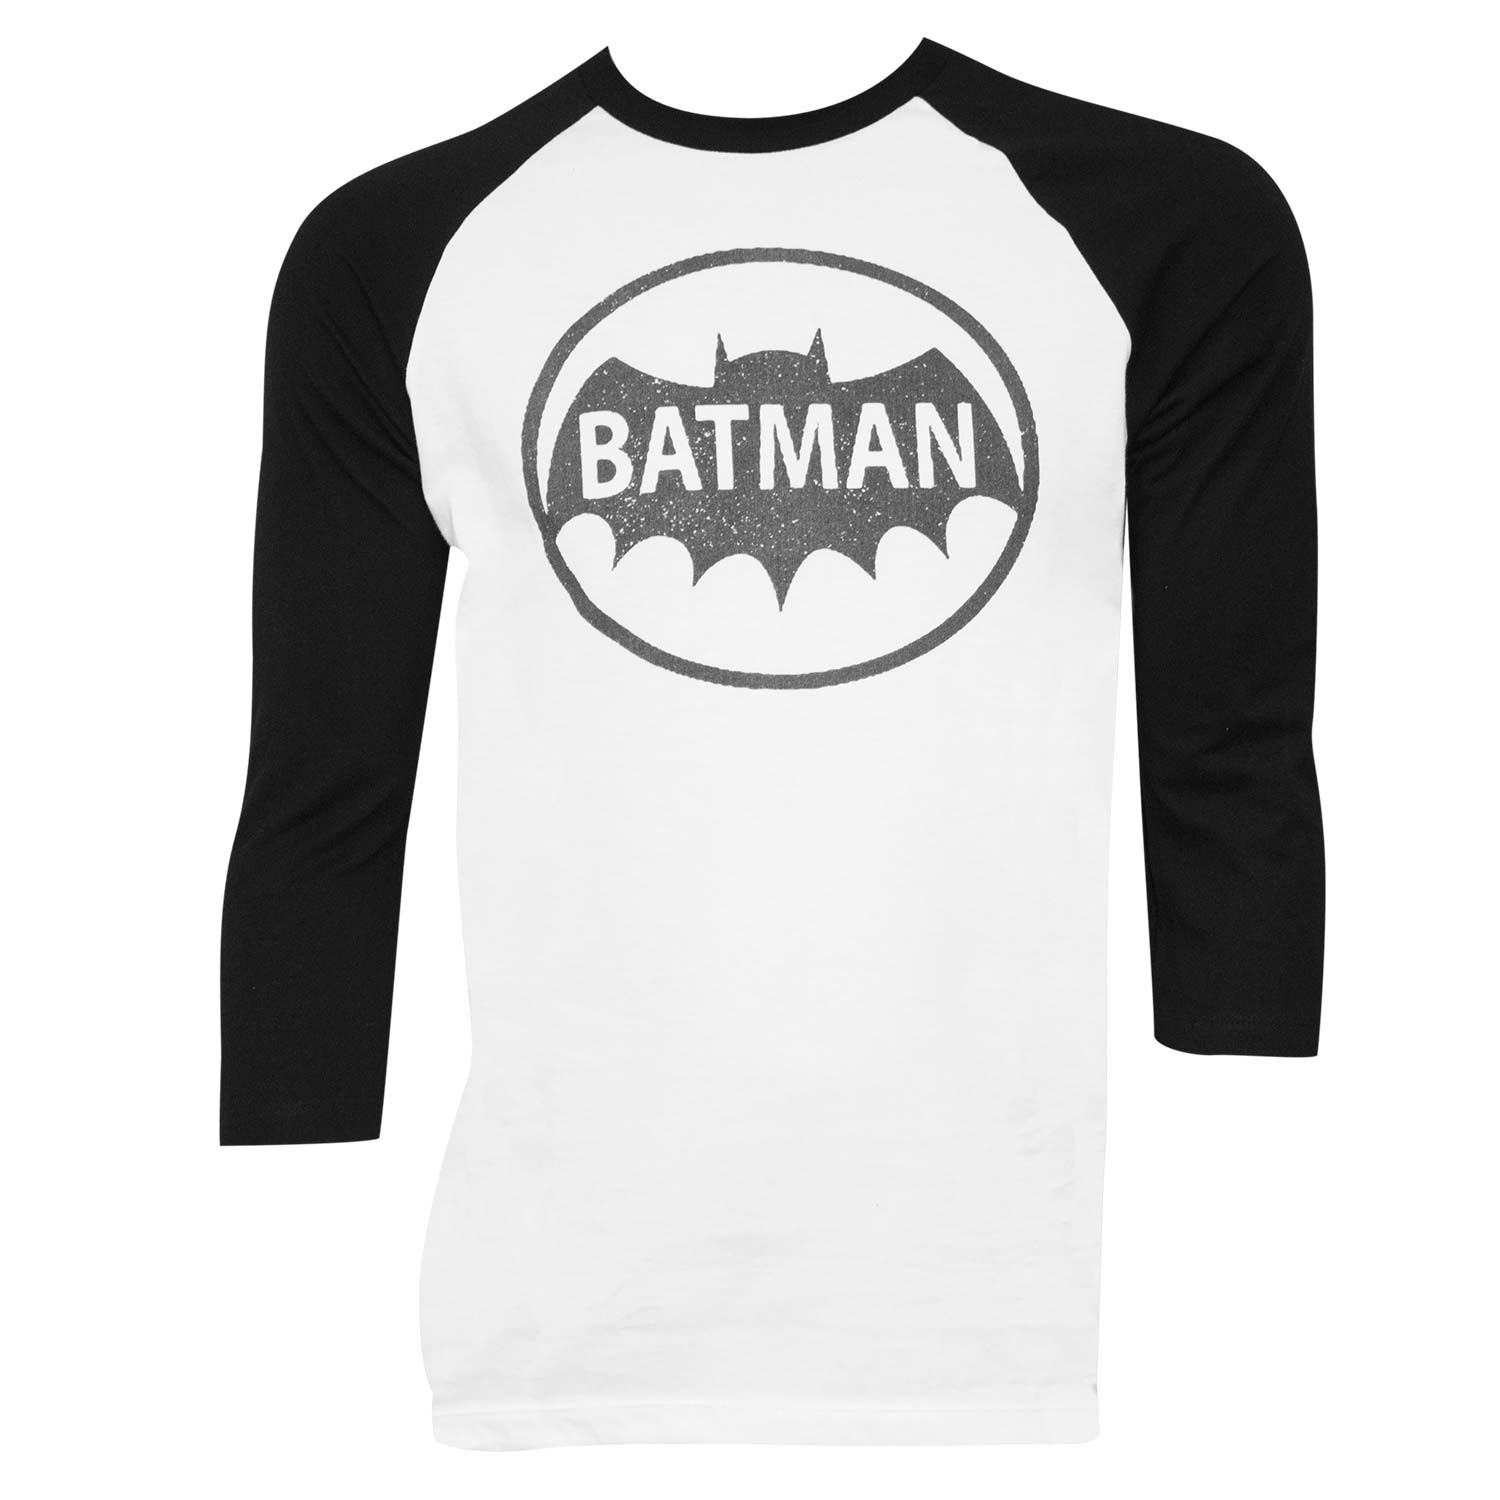 Batman Raglan Sleeve White Tee Shirt